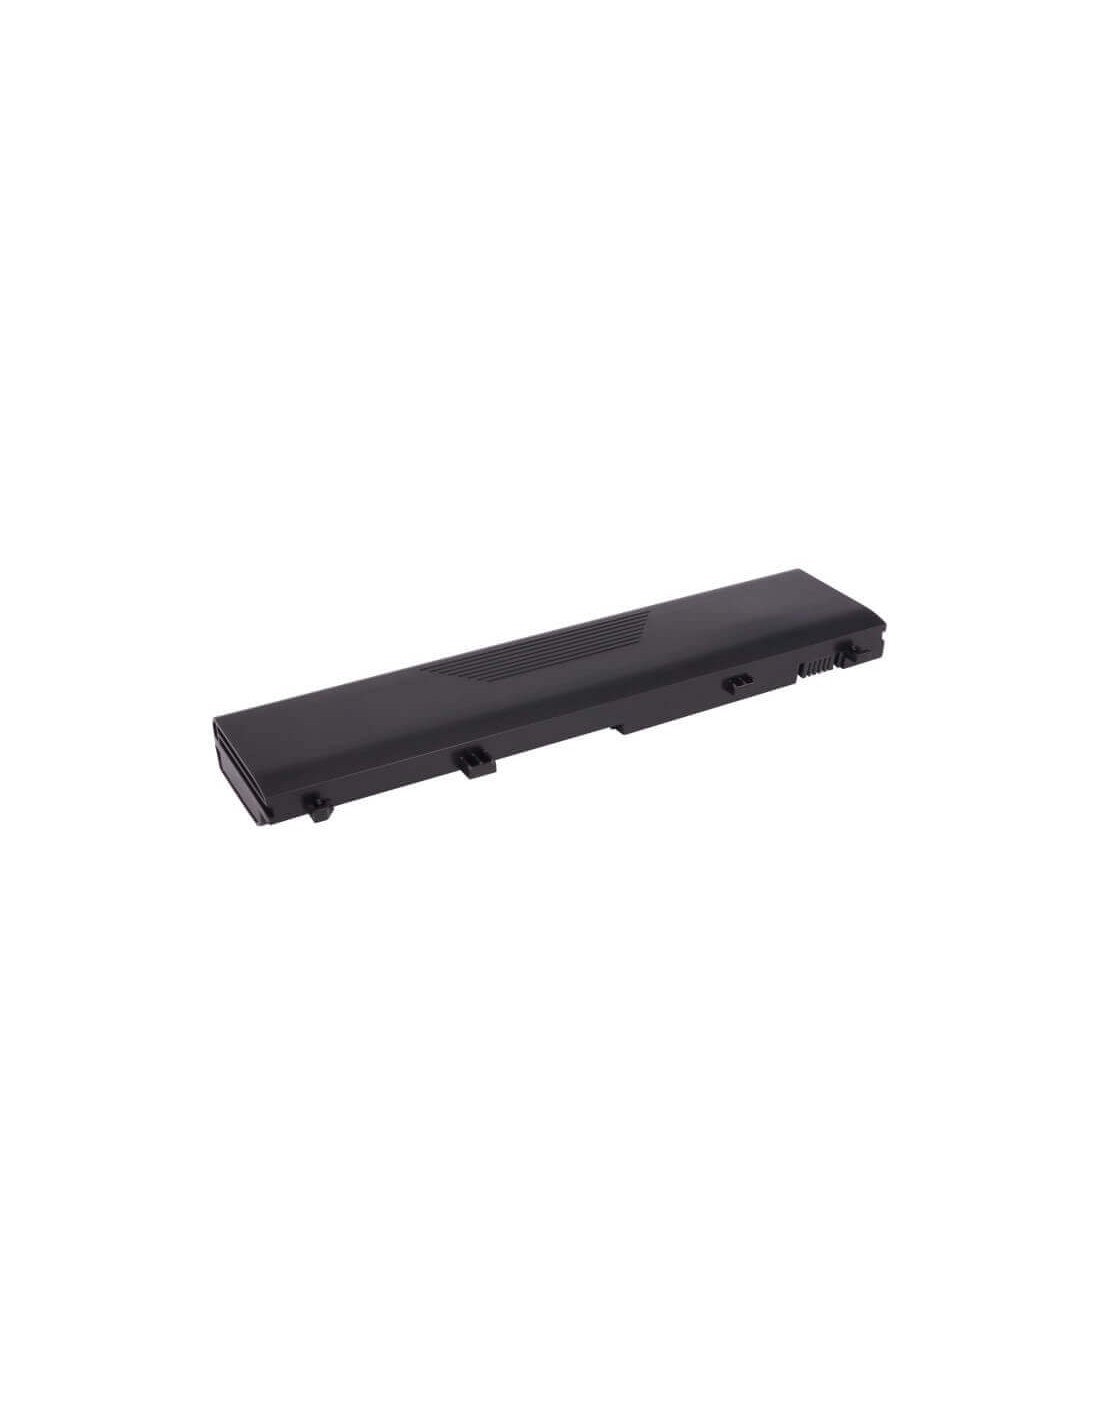 Black Battery for Benq Joybook S52, Joybook S52e, Joybook S52w 10.8V, 4400mAh - 47.52Wh